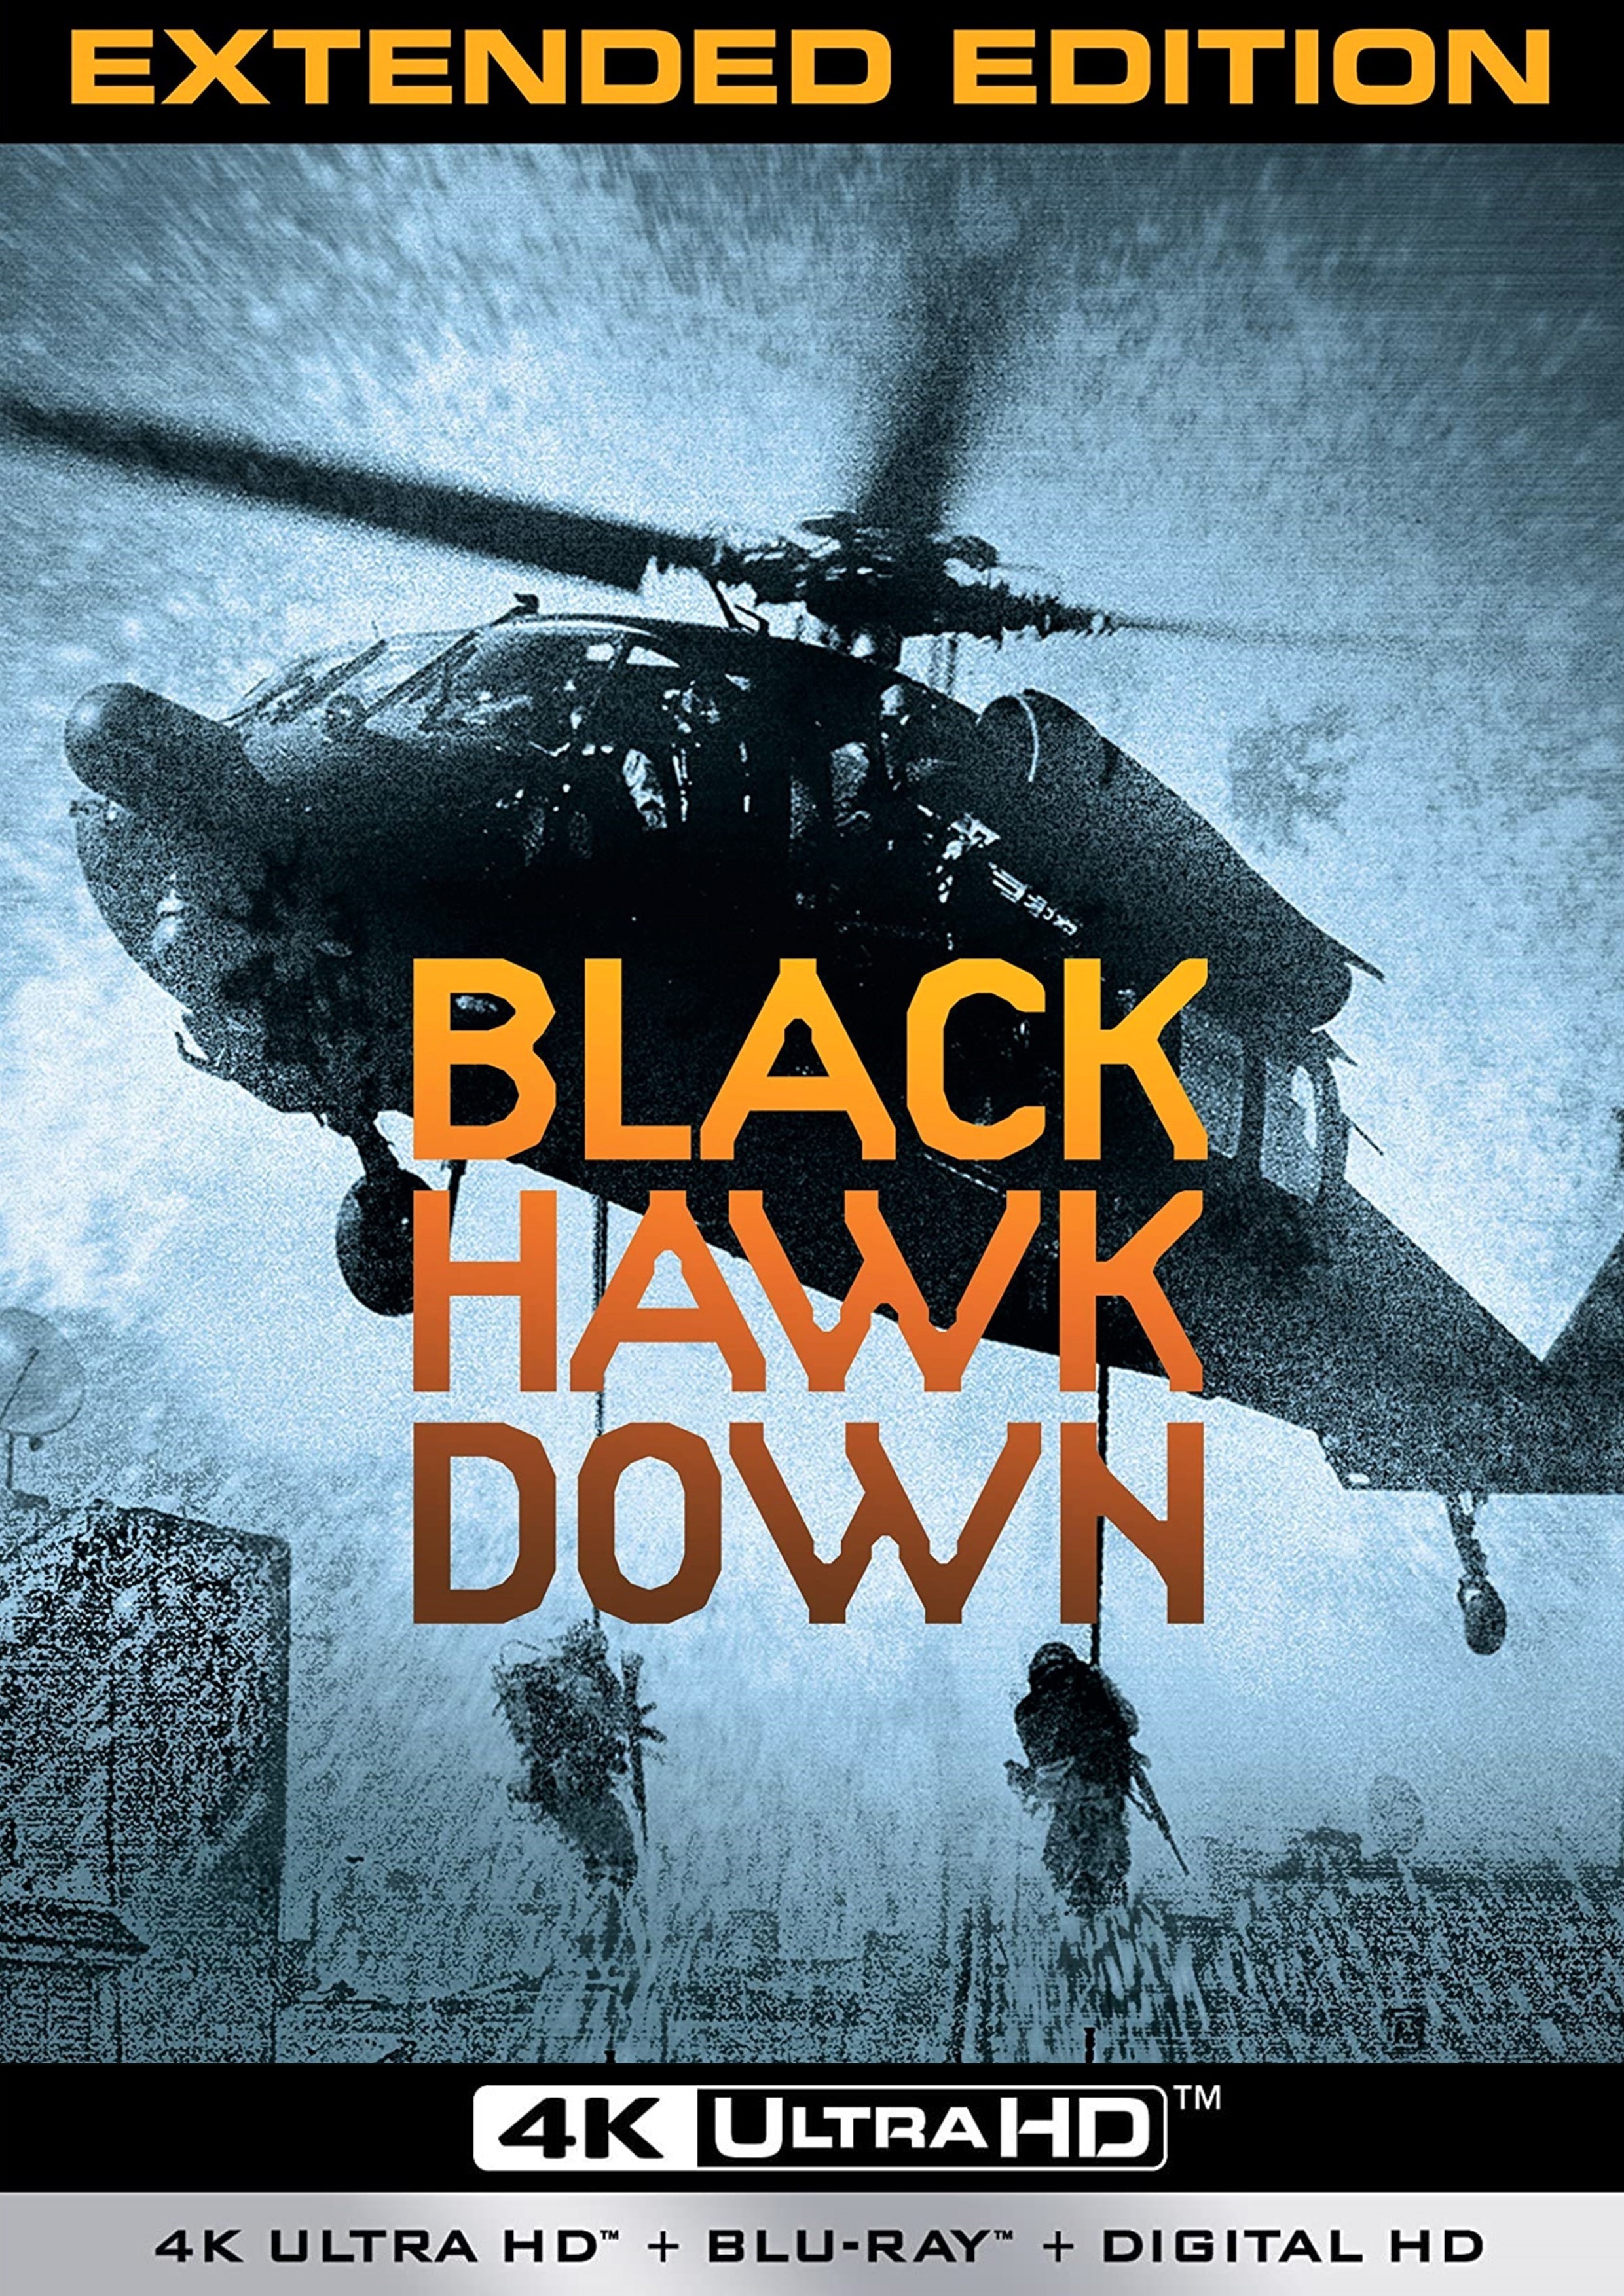 Stiahni si UHD Filmy Cerny jestrab sestrelen / Black Hawk Down (2001)(CZ/EN)(2160p 4K BRRip) = CSFD 87%